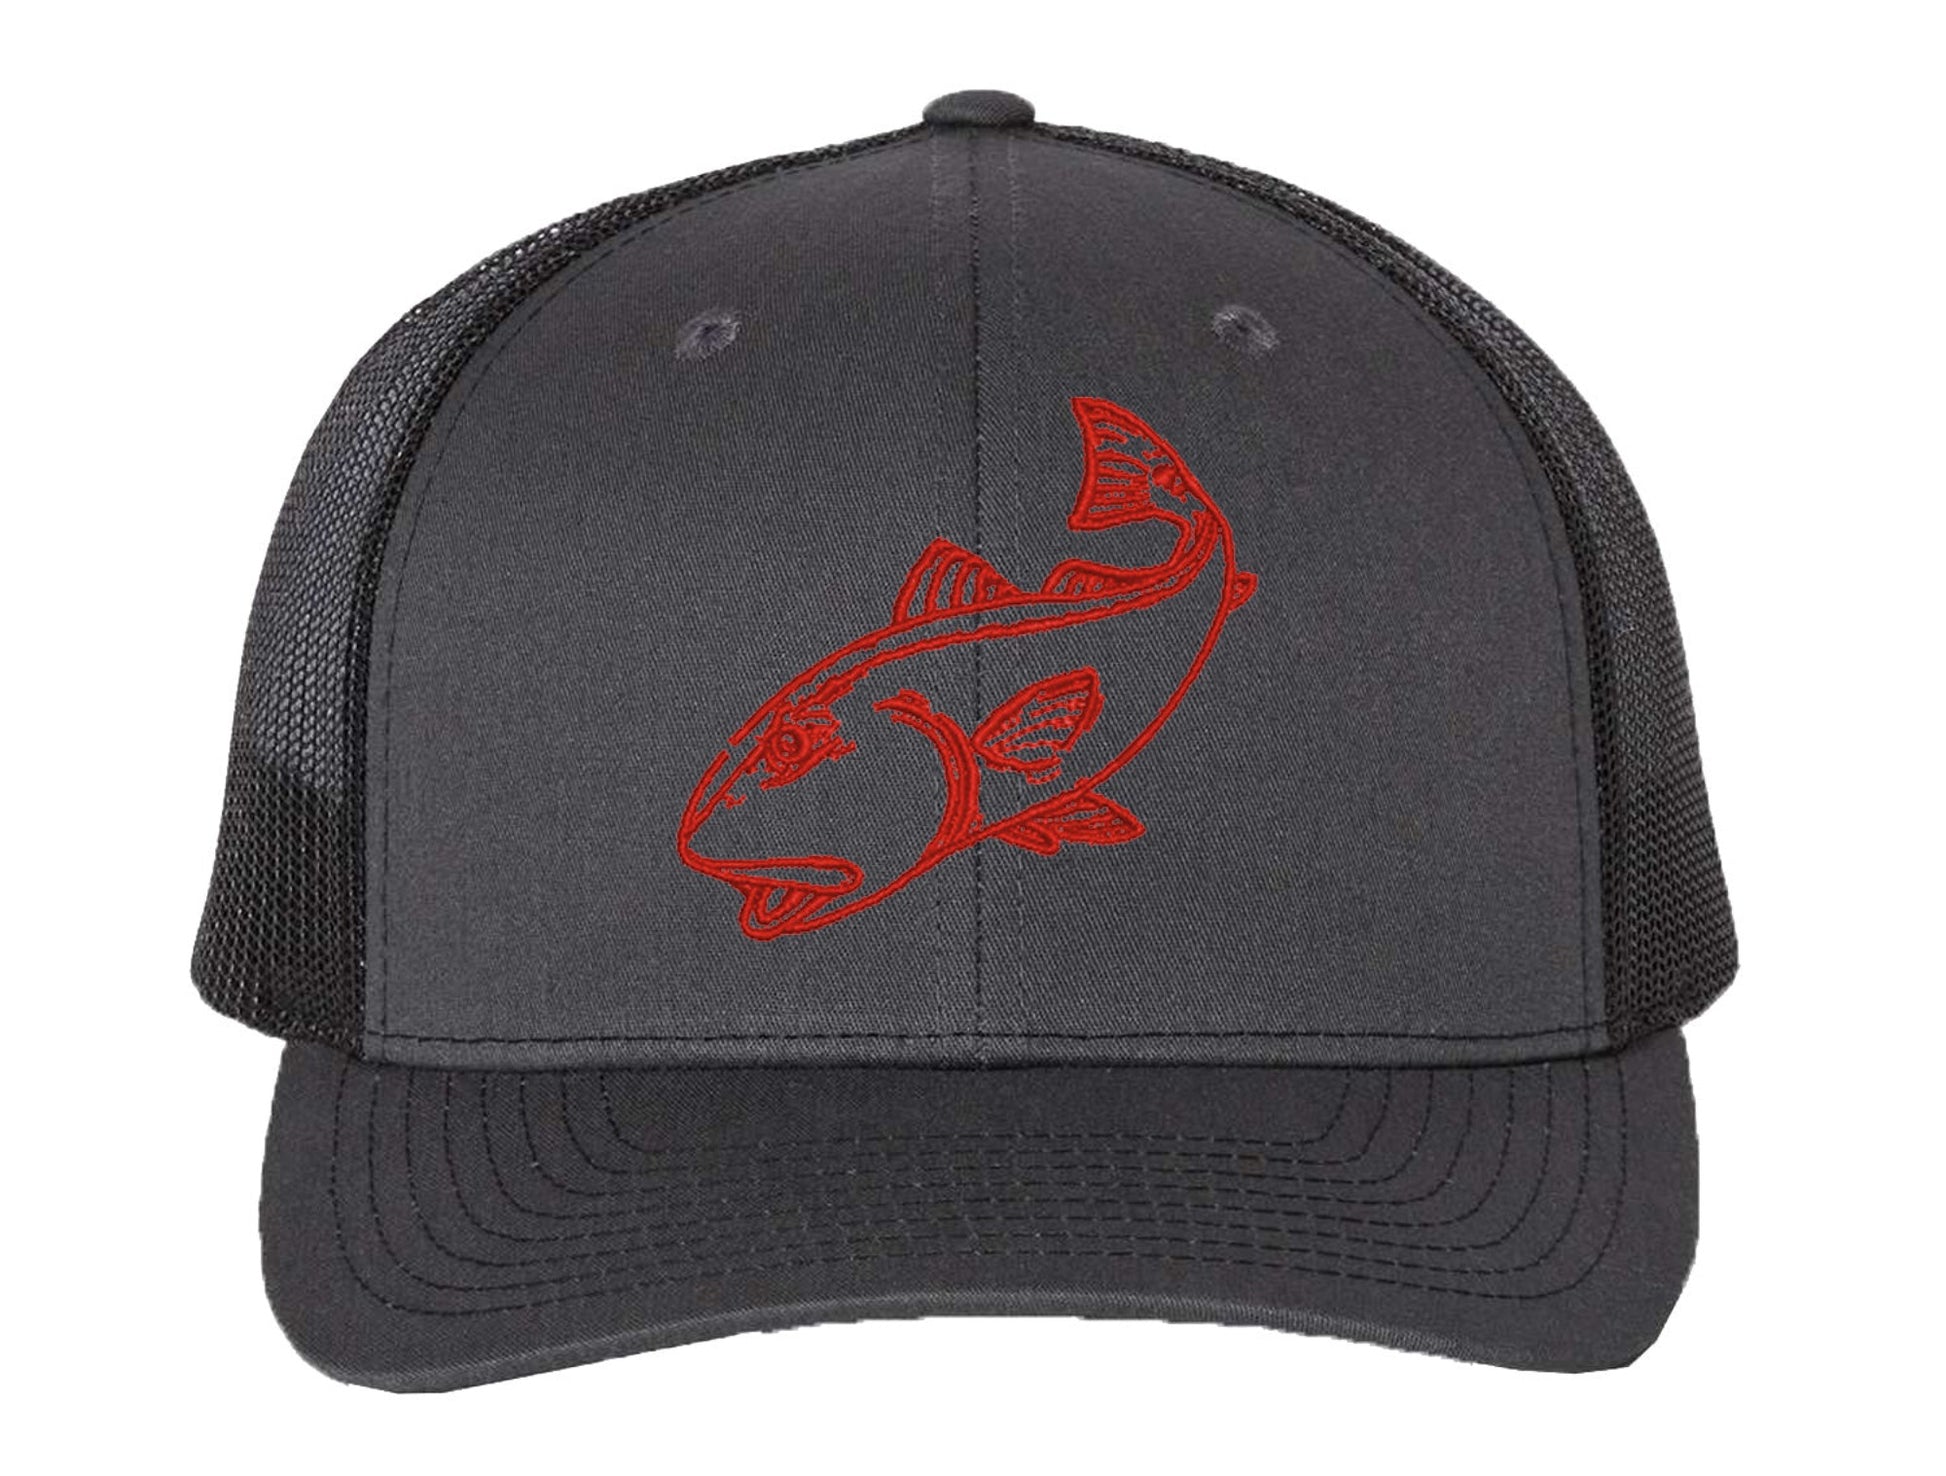 RedfishCharcoal/Black mesh Structured Trucker Hat w/Red logo